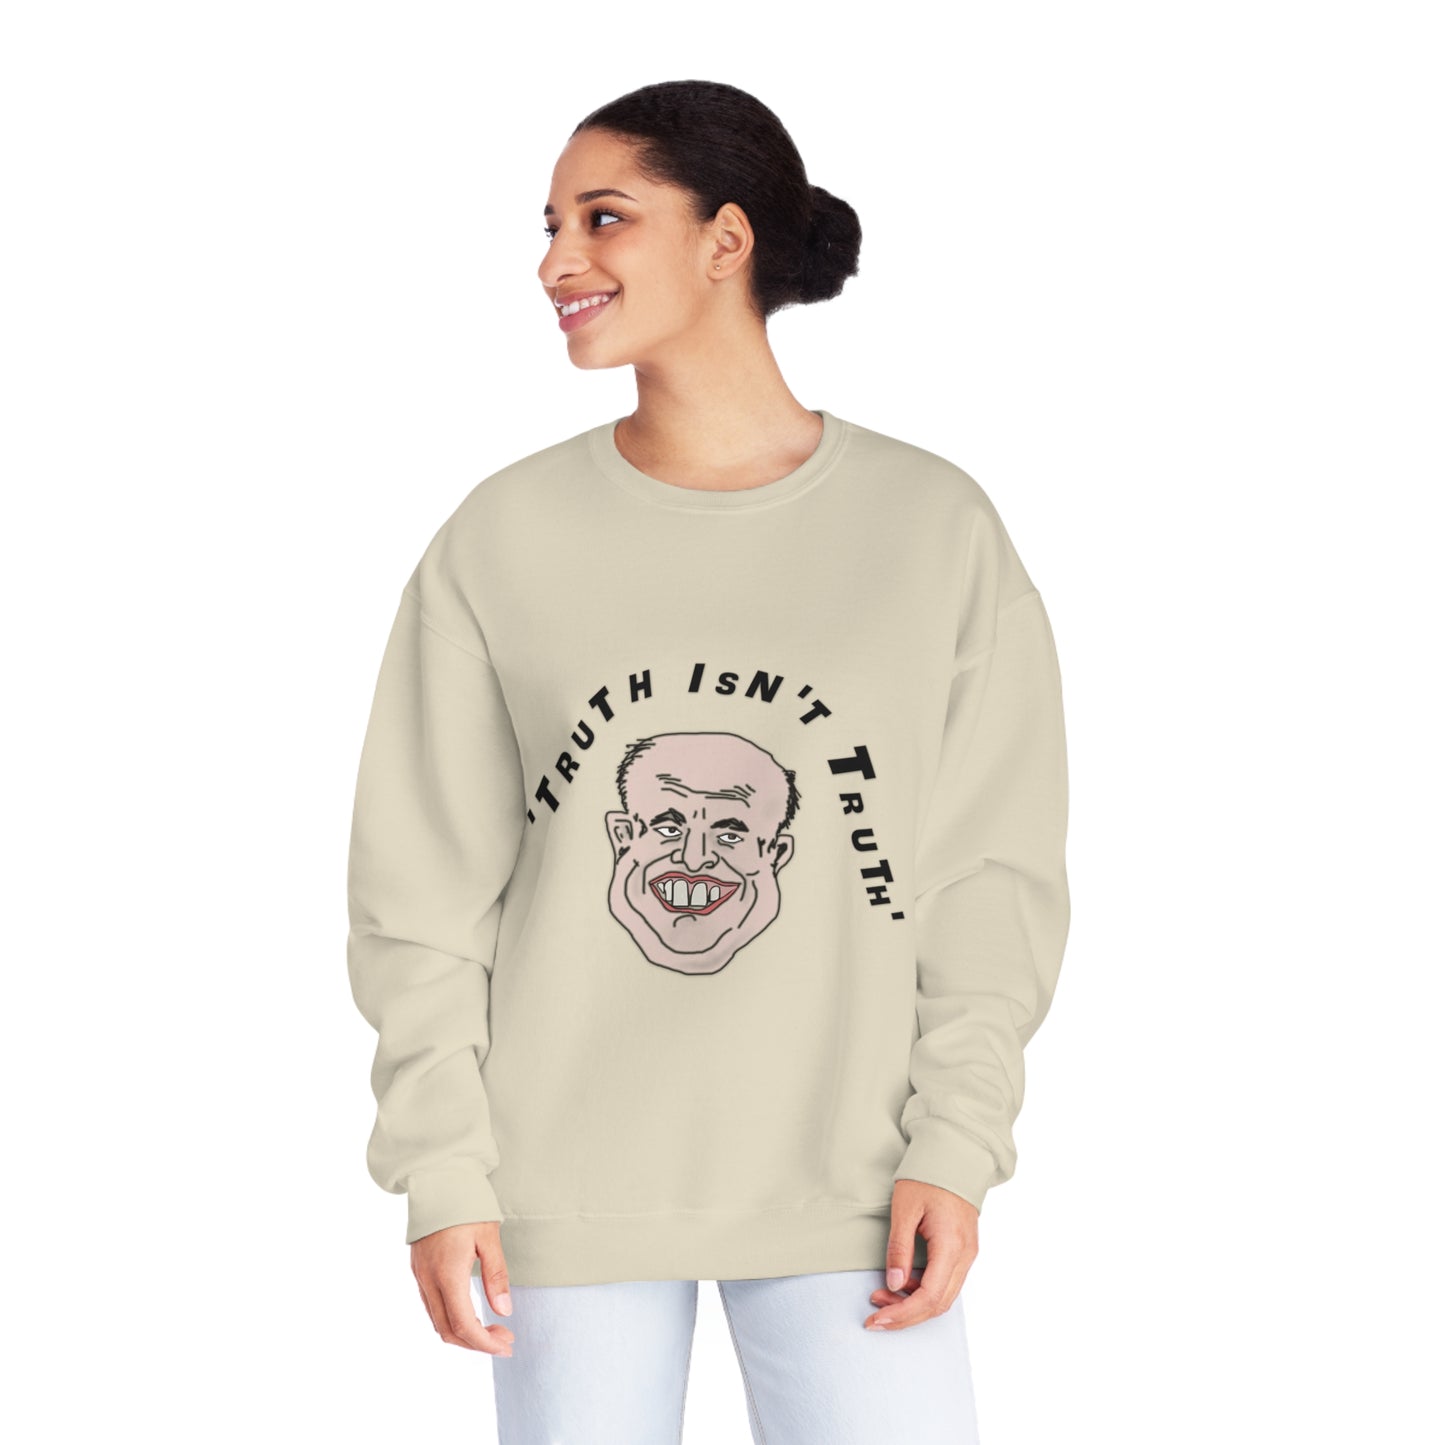 Rudy's Truth Crewneck Sweatshirt